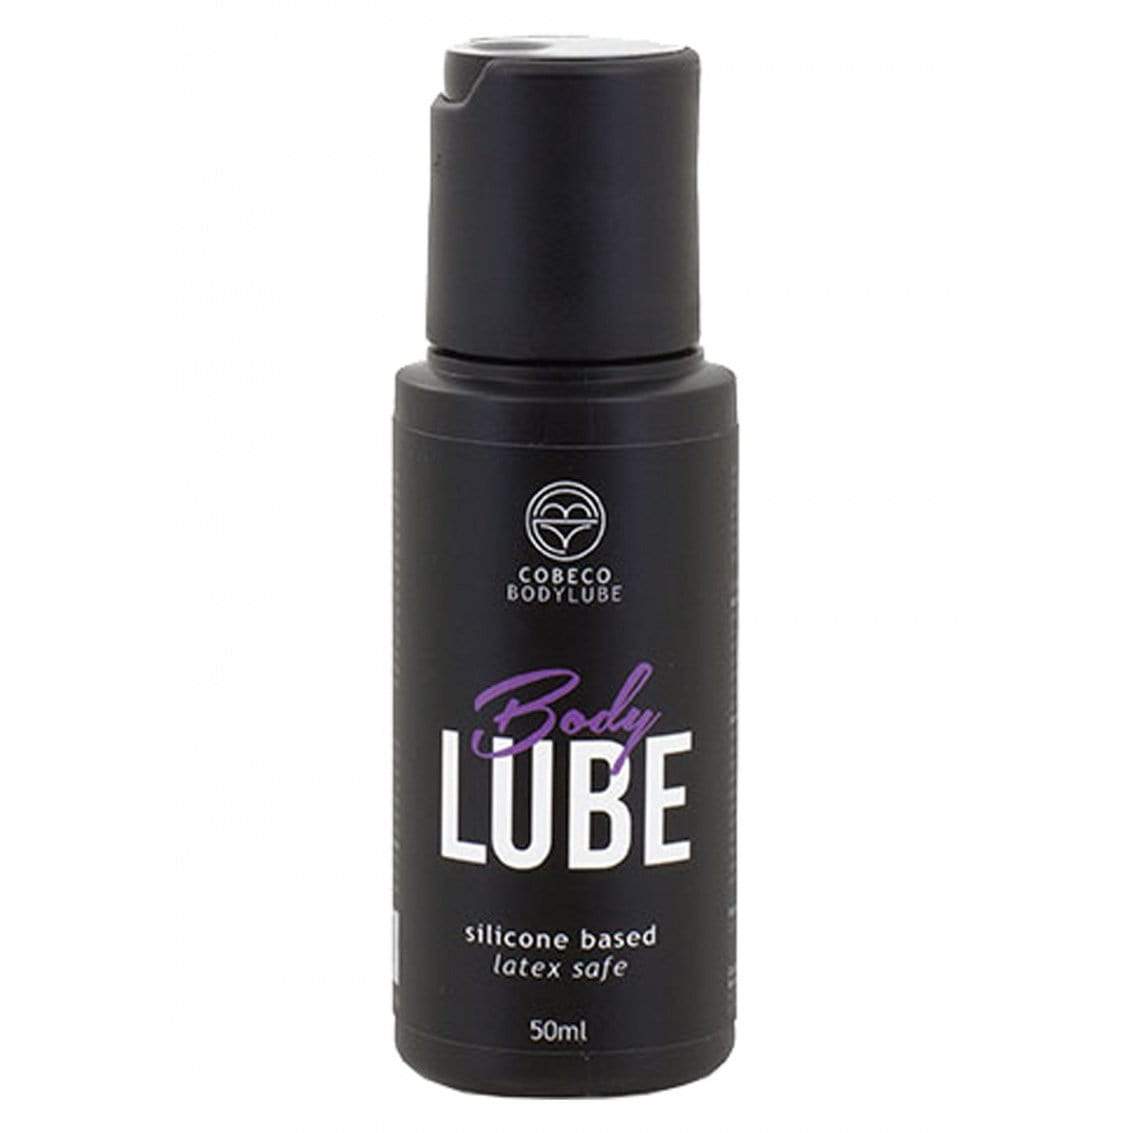 Cobeco Pharma - CBL Body Lube Silicone Based Lubricant  50ml 8718546544194 Lube (Silicone Based)